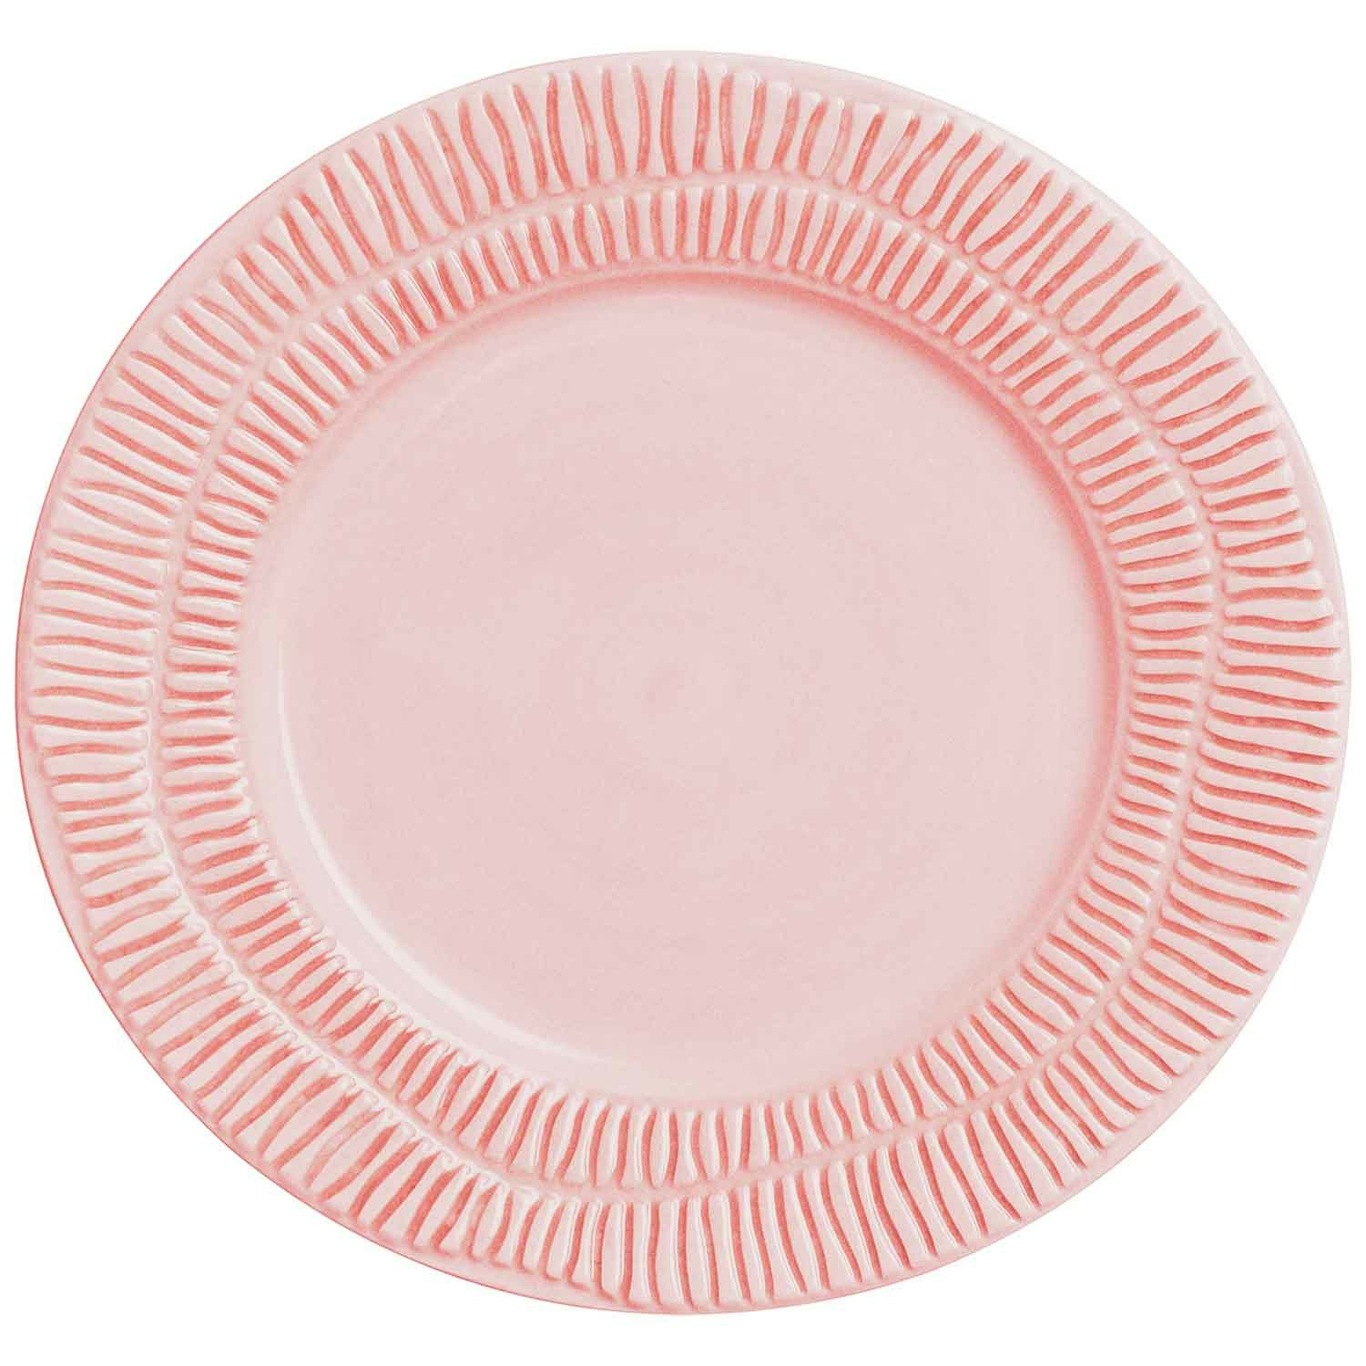 Stripes Plate 21 cm, Light pink 